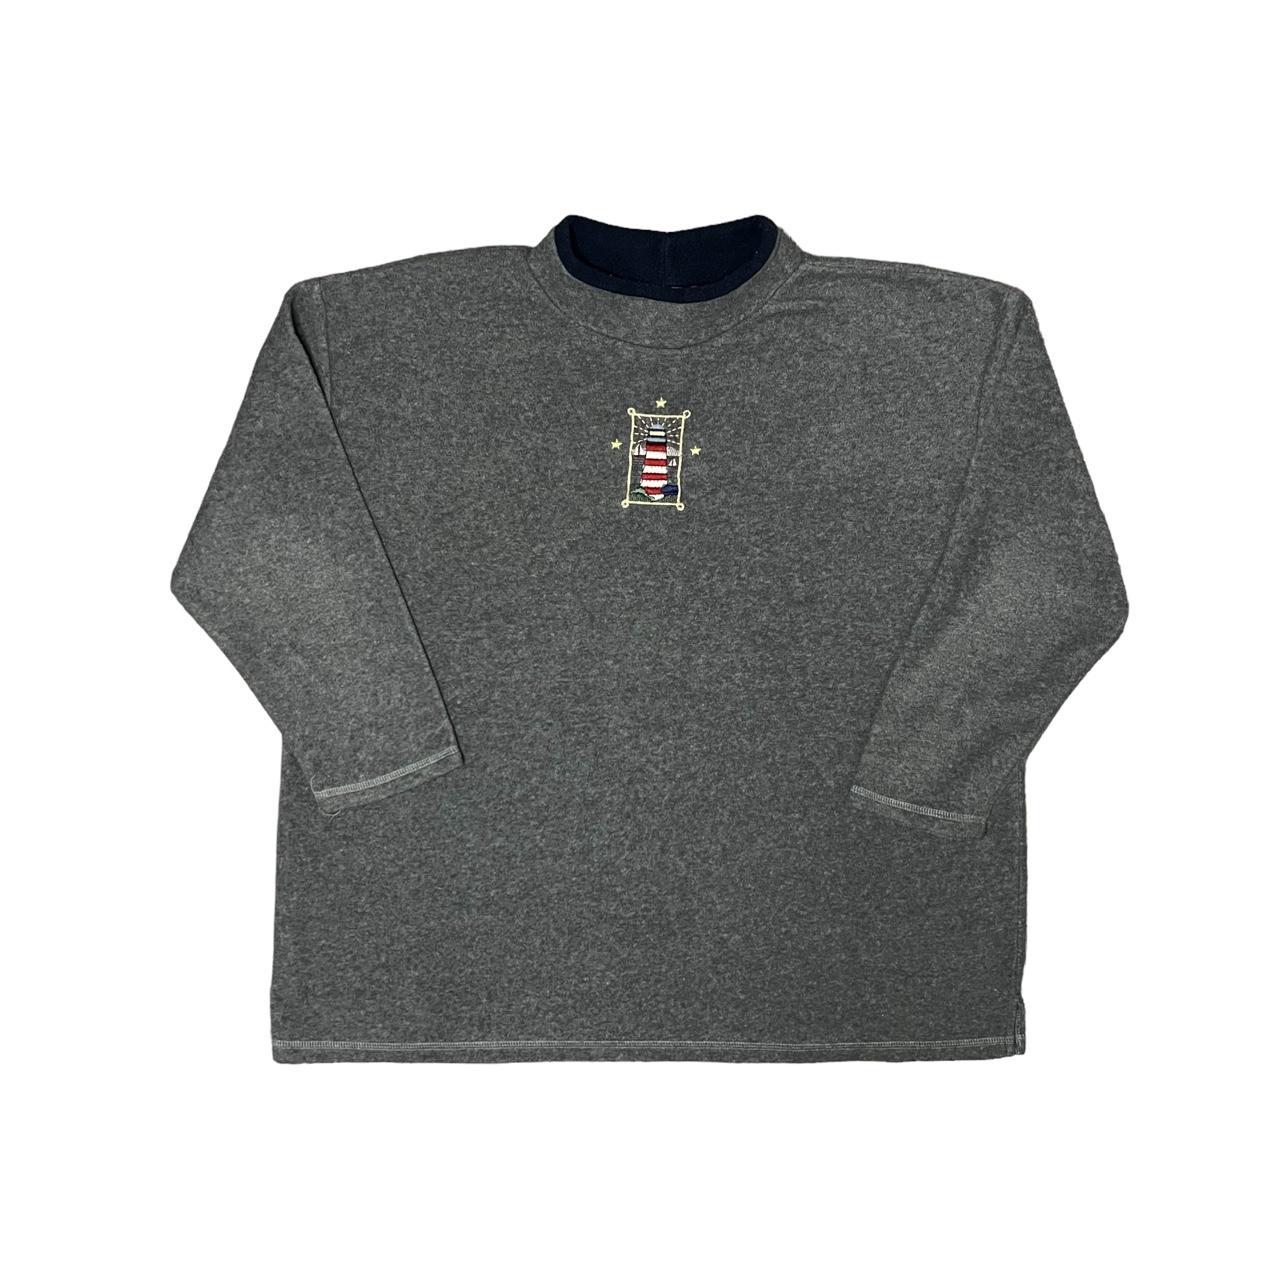 Top Stitch Men's Grey Sweatshirt